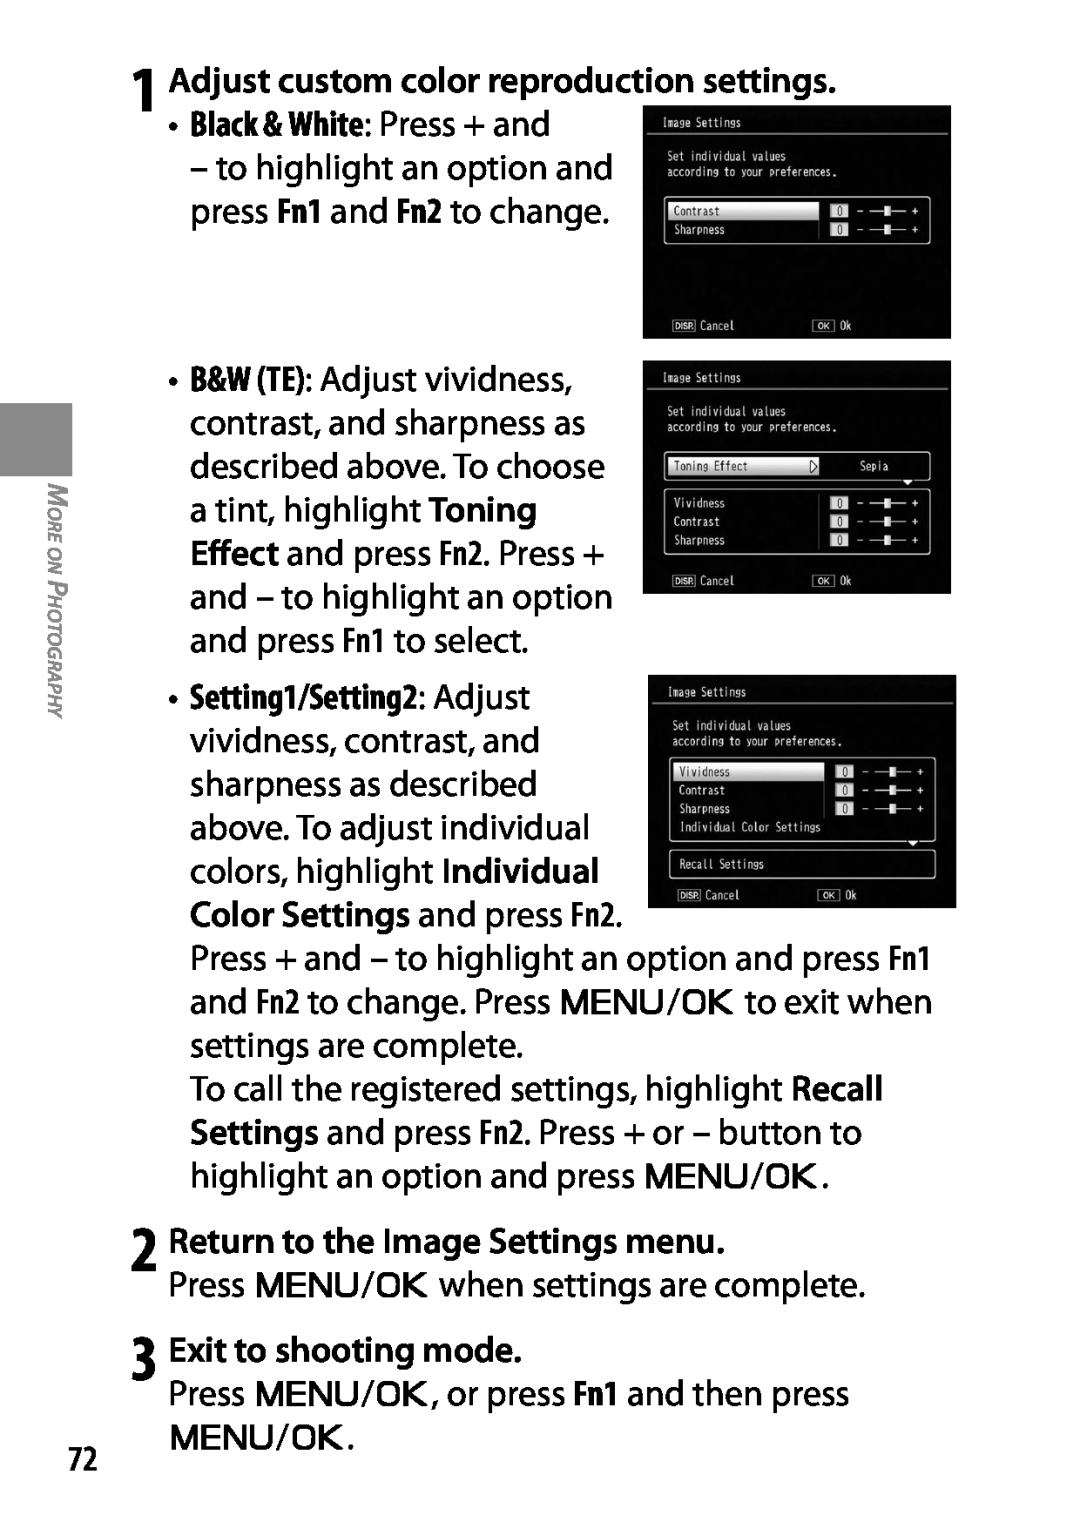 Ricoh GXR manual 2, Adjust custom color reproduction settings Black & White Press + and, Return to the Image Settings menu 